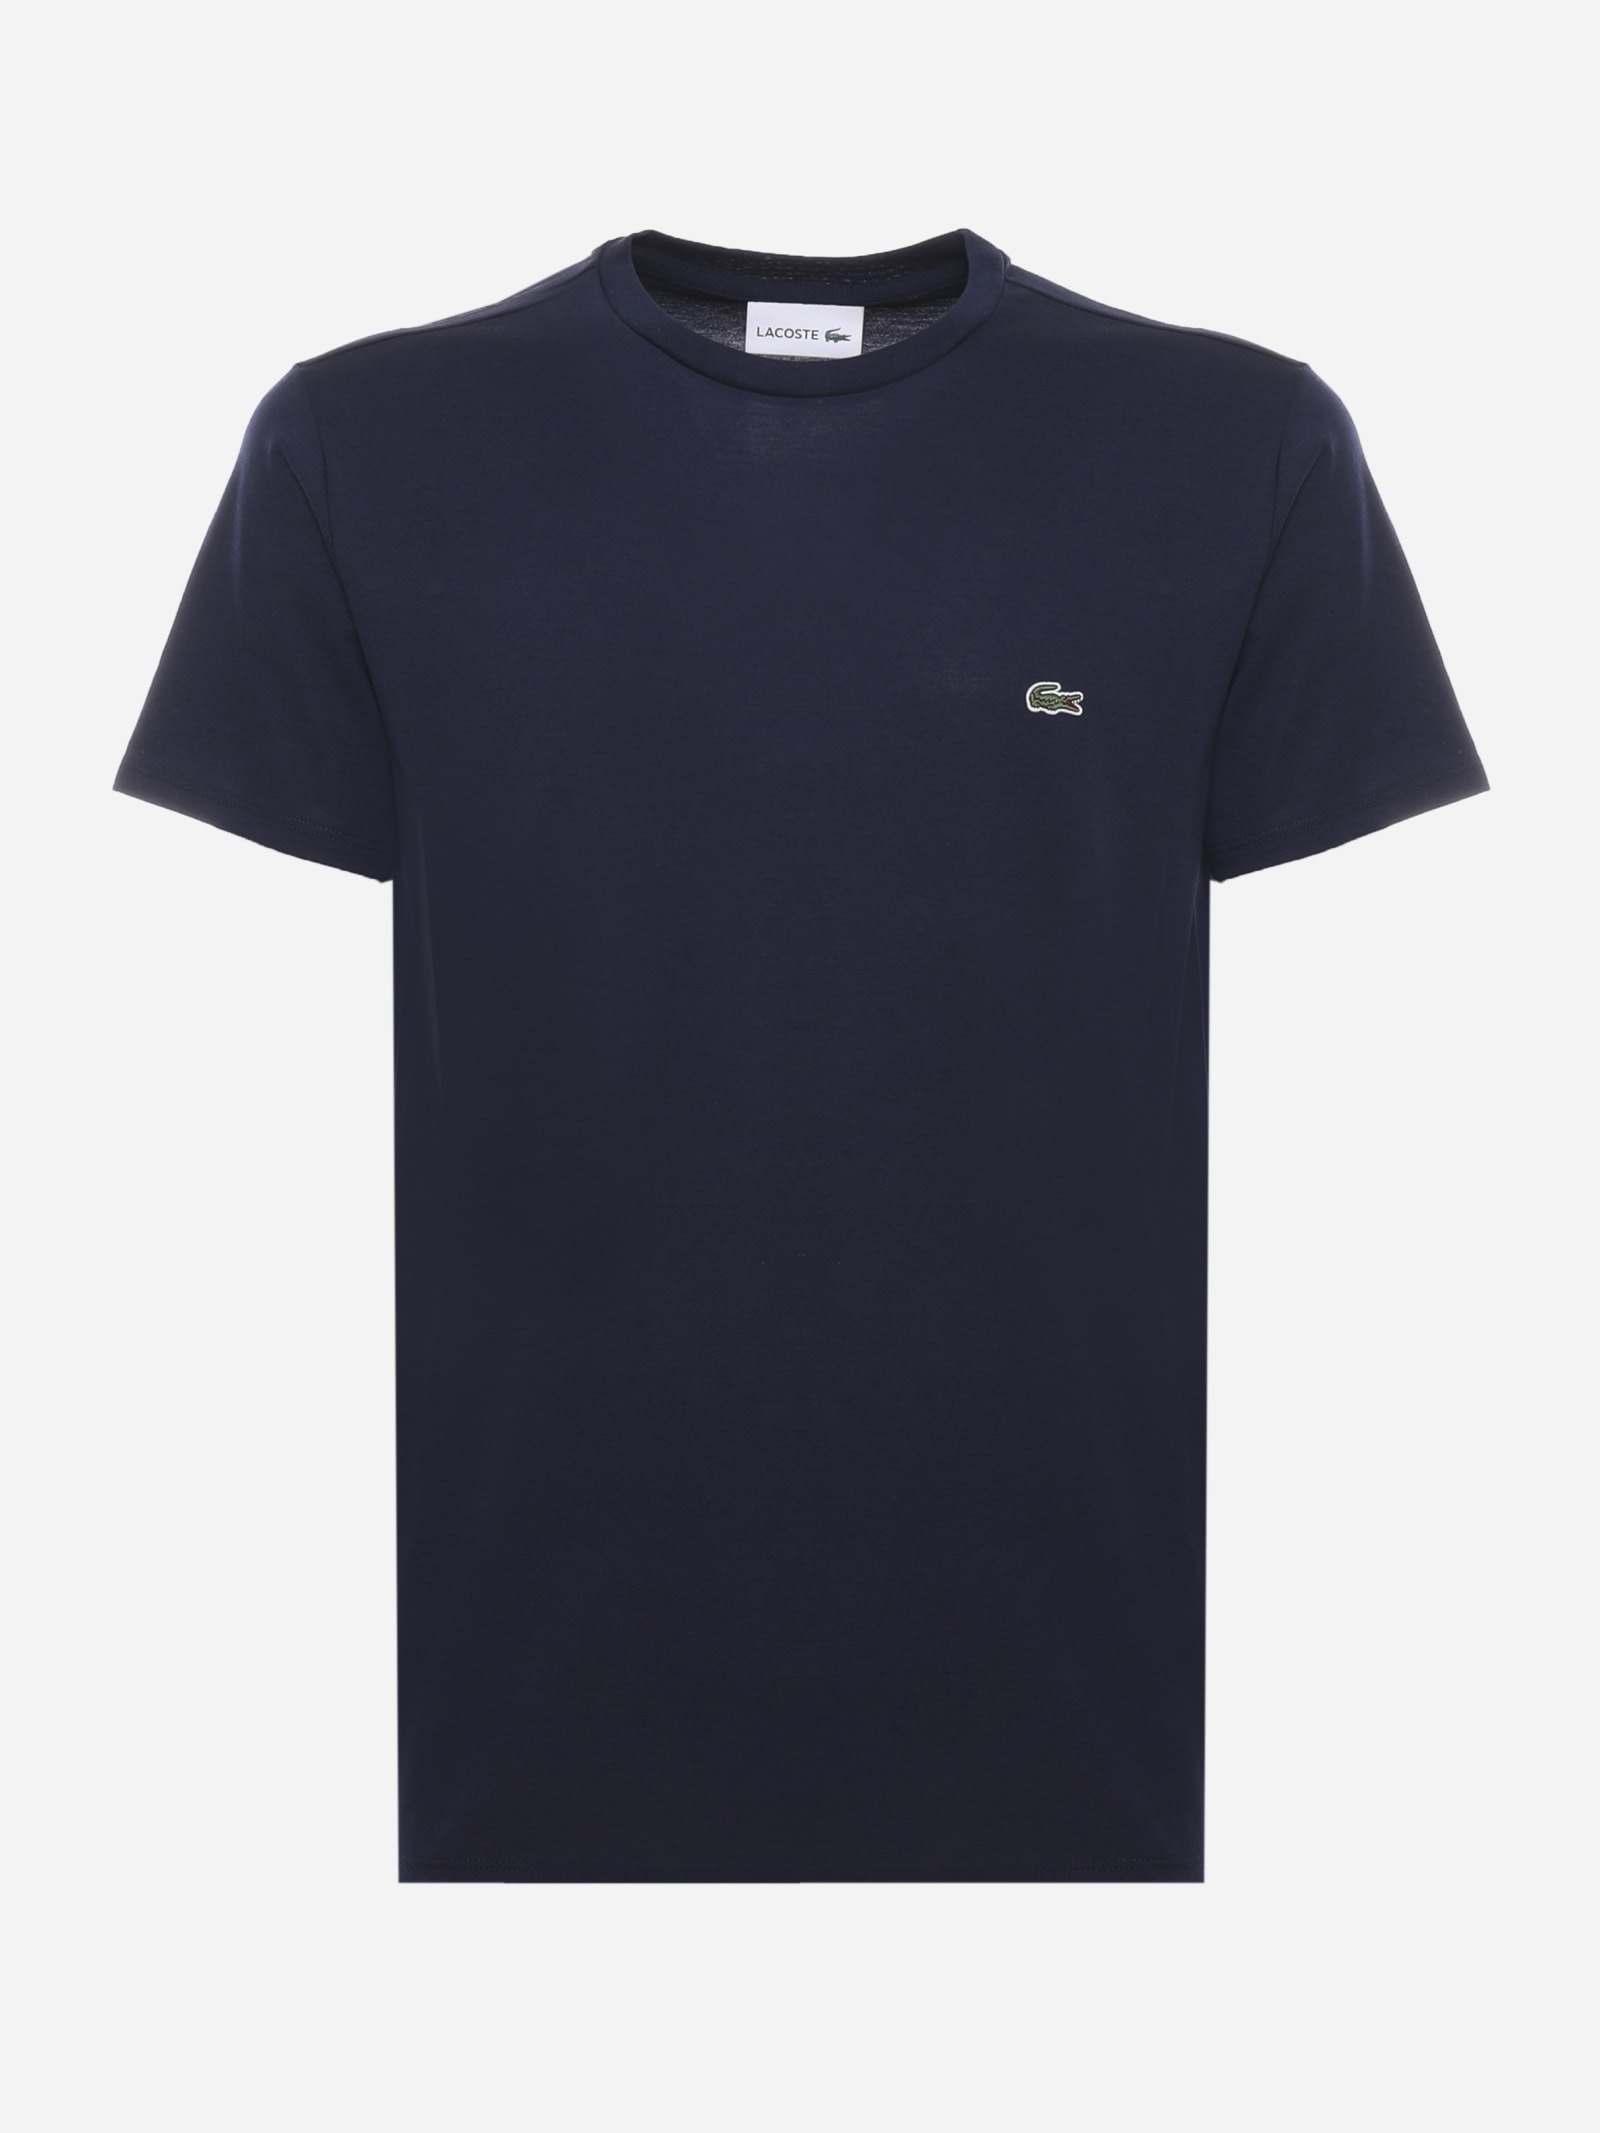 Lacoste Navy Blue Cotton Jersey T-shirt